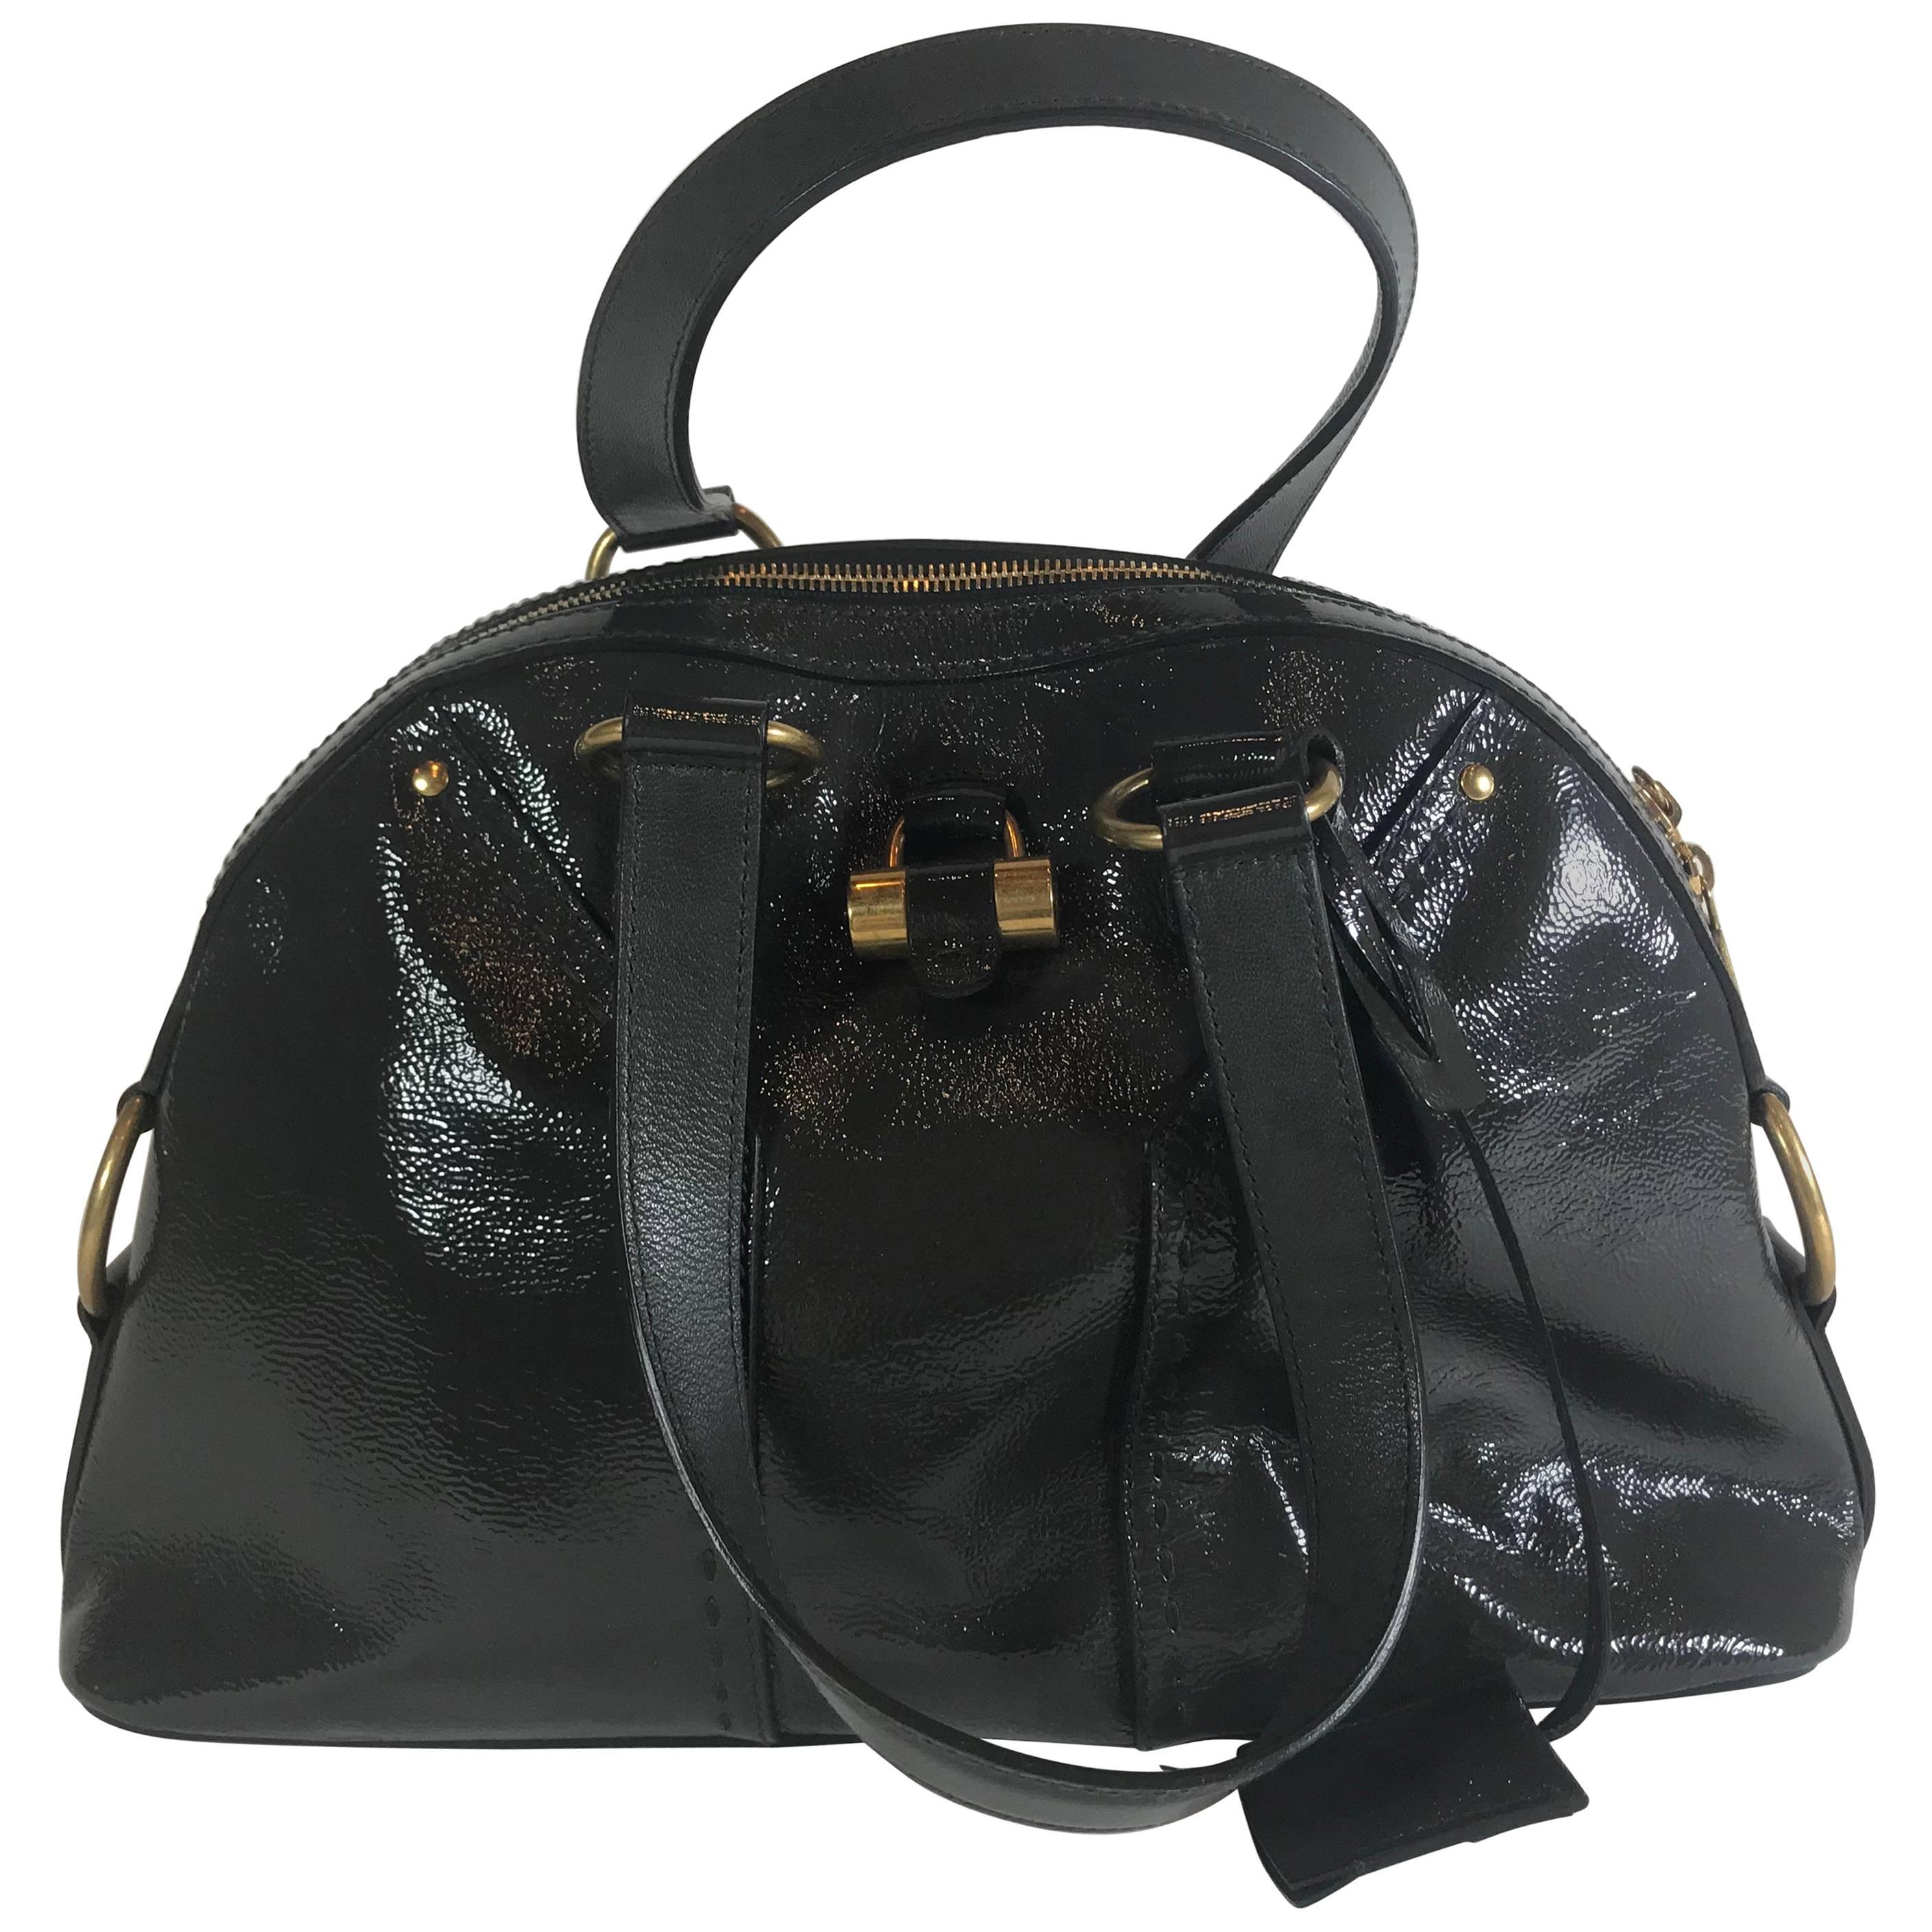 Yves Saint Laurent Muse Bag For Sale